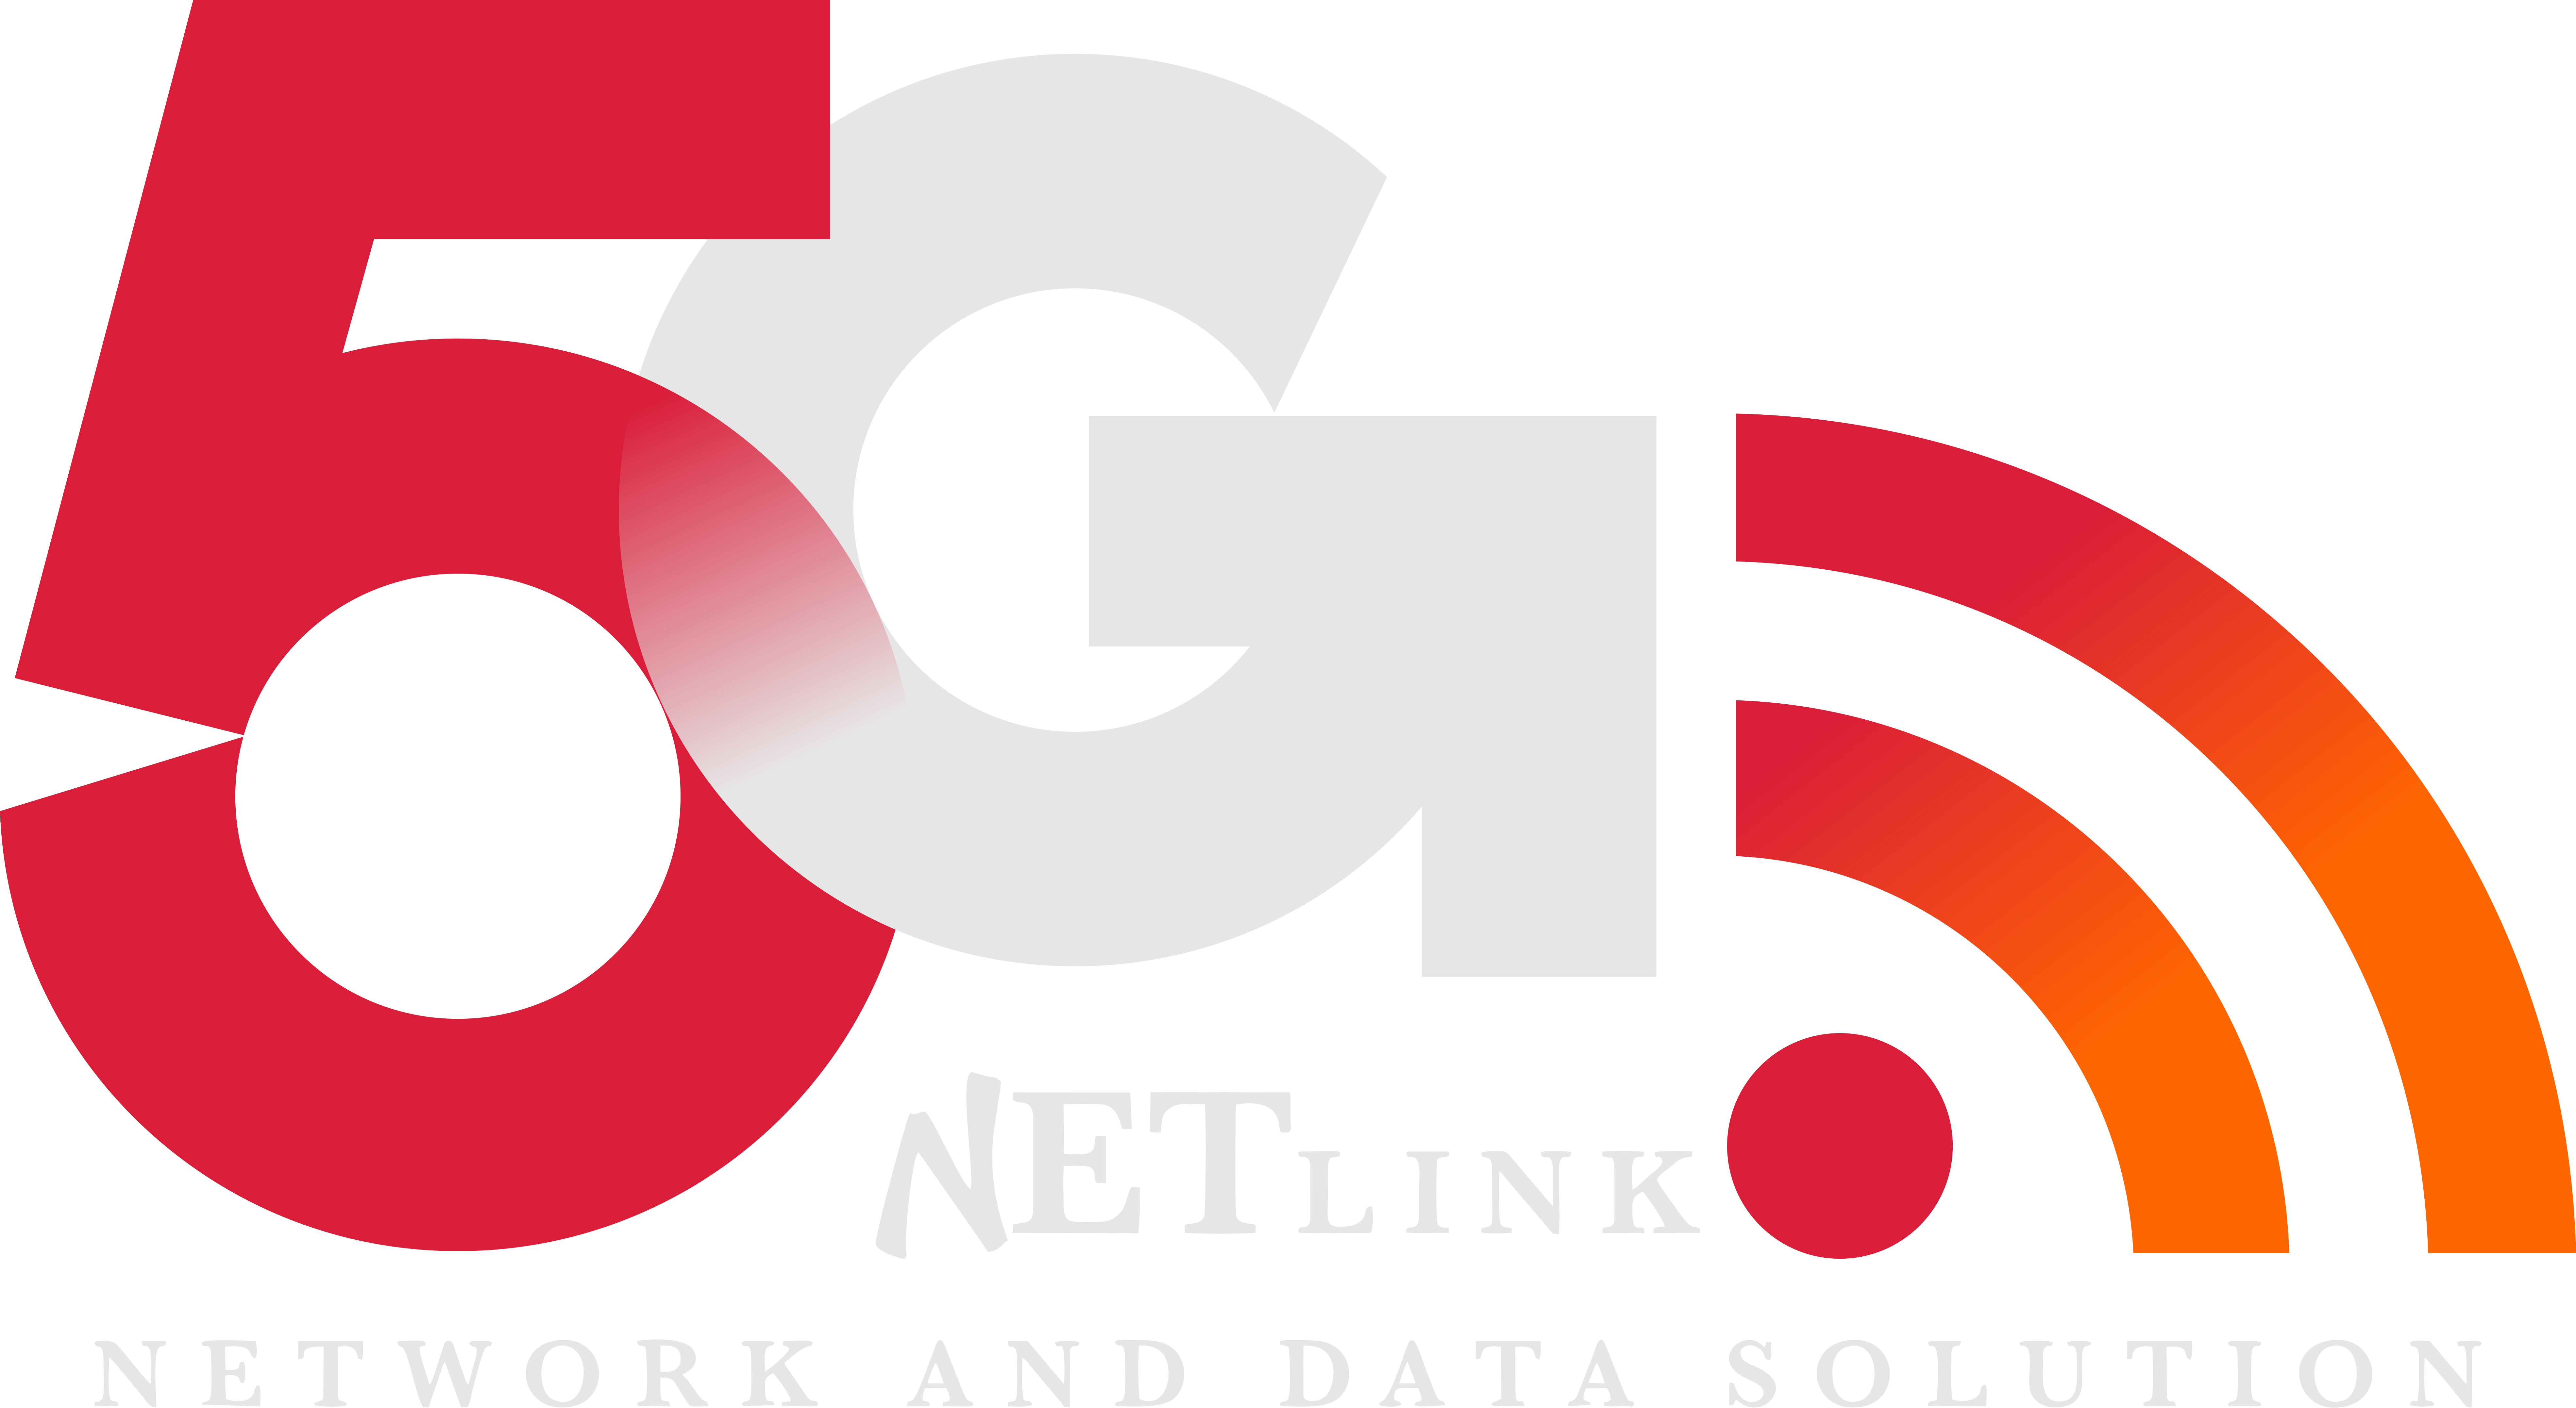 netlink network and data solution